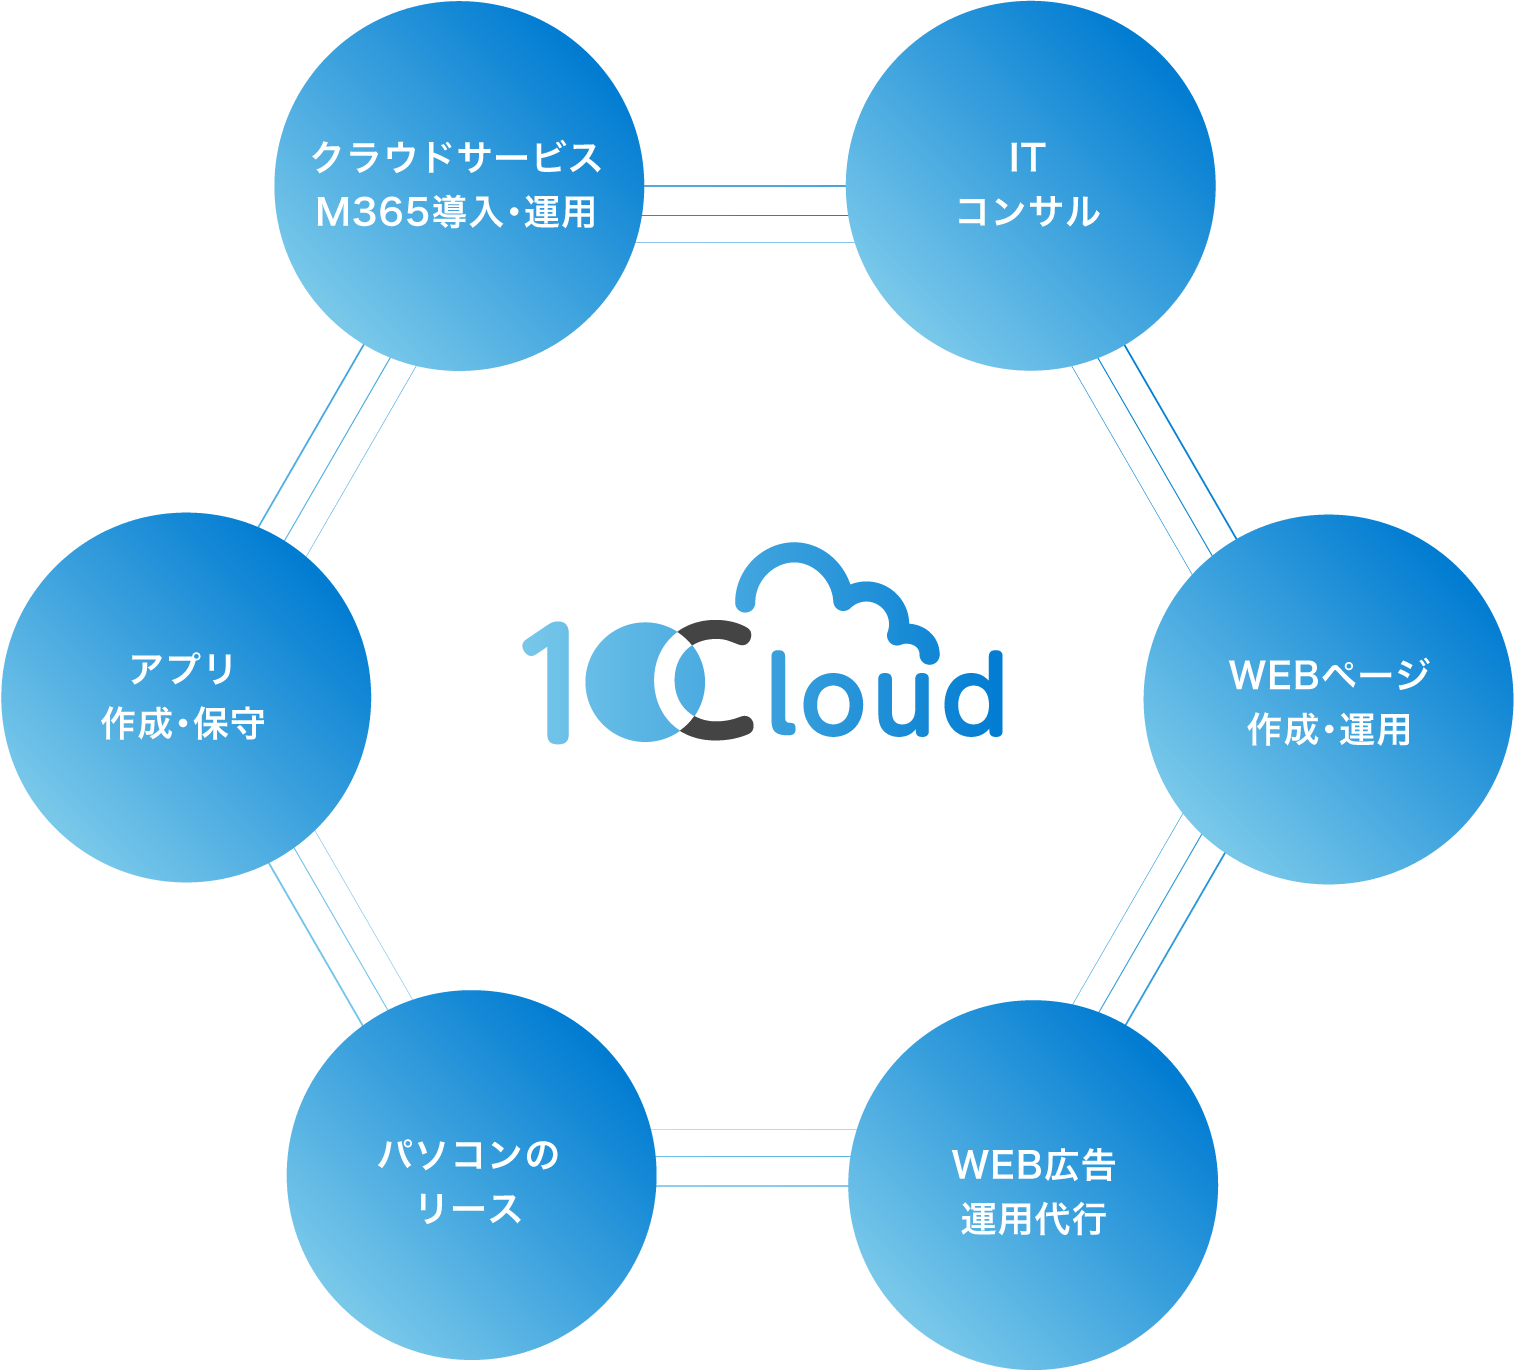 10-Cloud株式会社（テンクラウド）チーム
1.クラウドサービスM365導入・運用
2.ITコンサル
3.WEBページ作成・運用
4.WEB広告運用代行
5.パソコンのリース
6.アプリ作成・保守